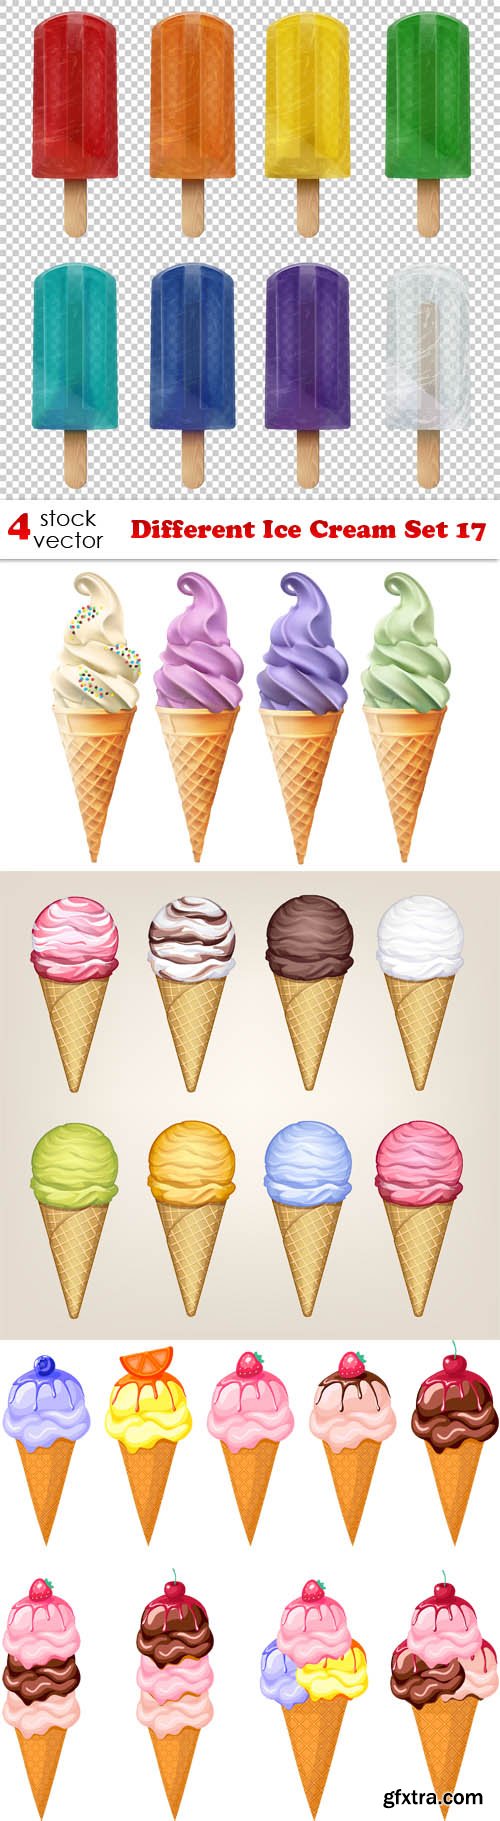 Vectors - Different Ice Cream Set 17